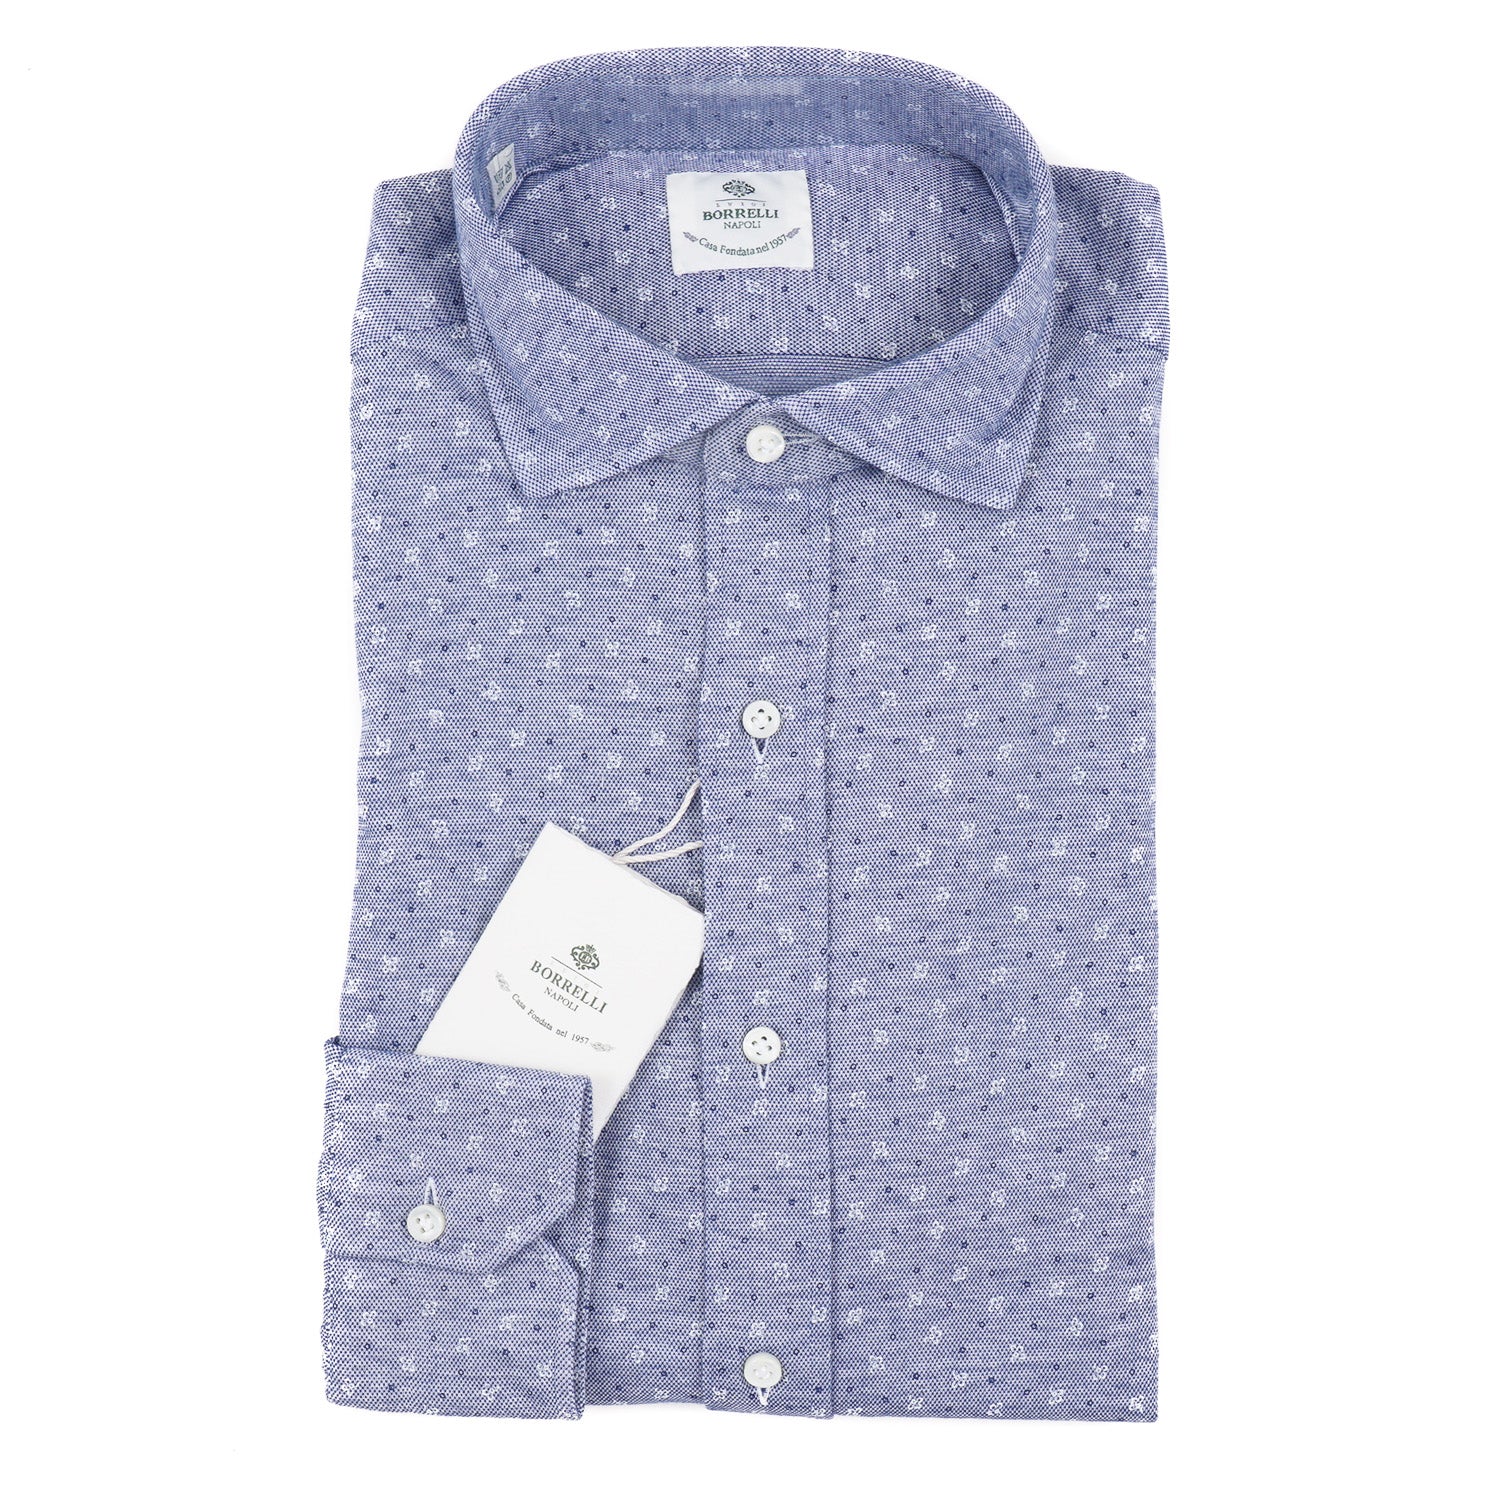 Luigi Borrelli Slim-Fit Knit Jersey Cotton Shirt - Top Shelf Apparel